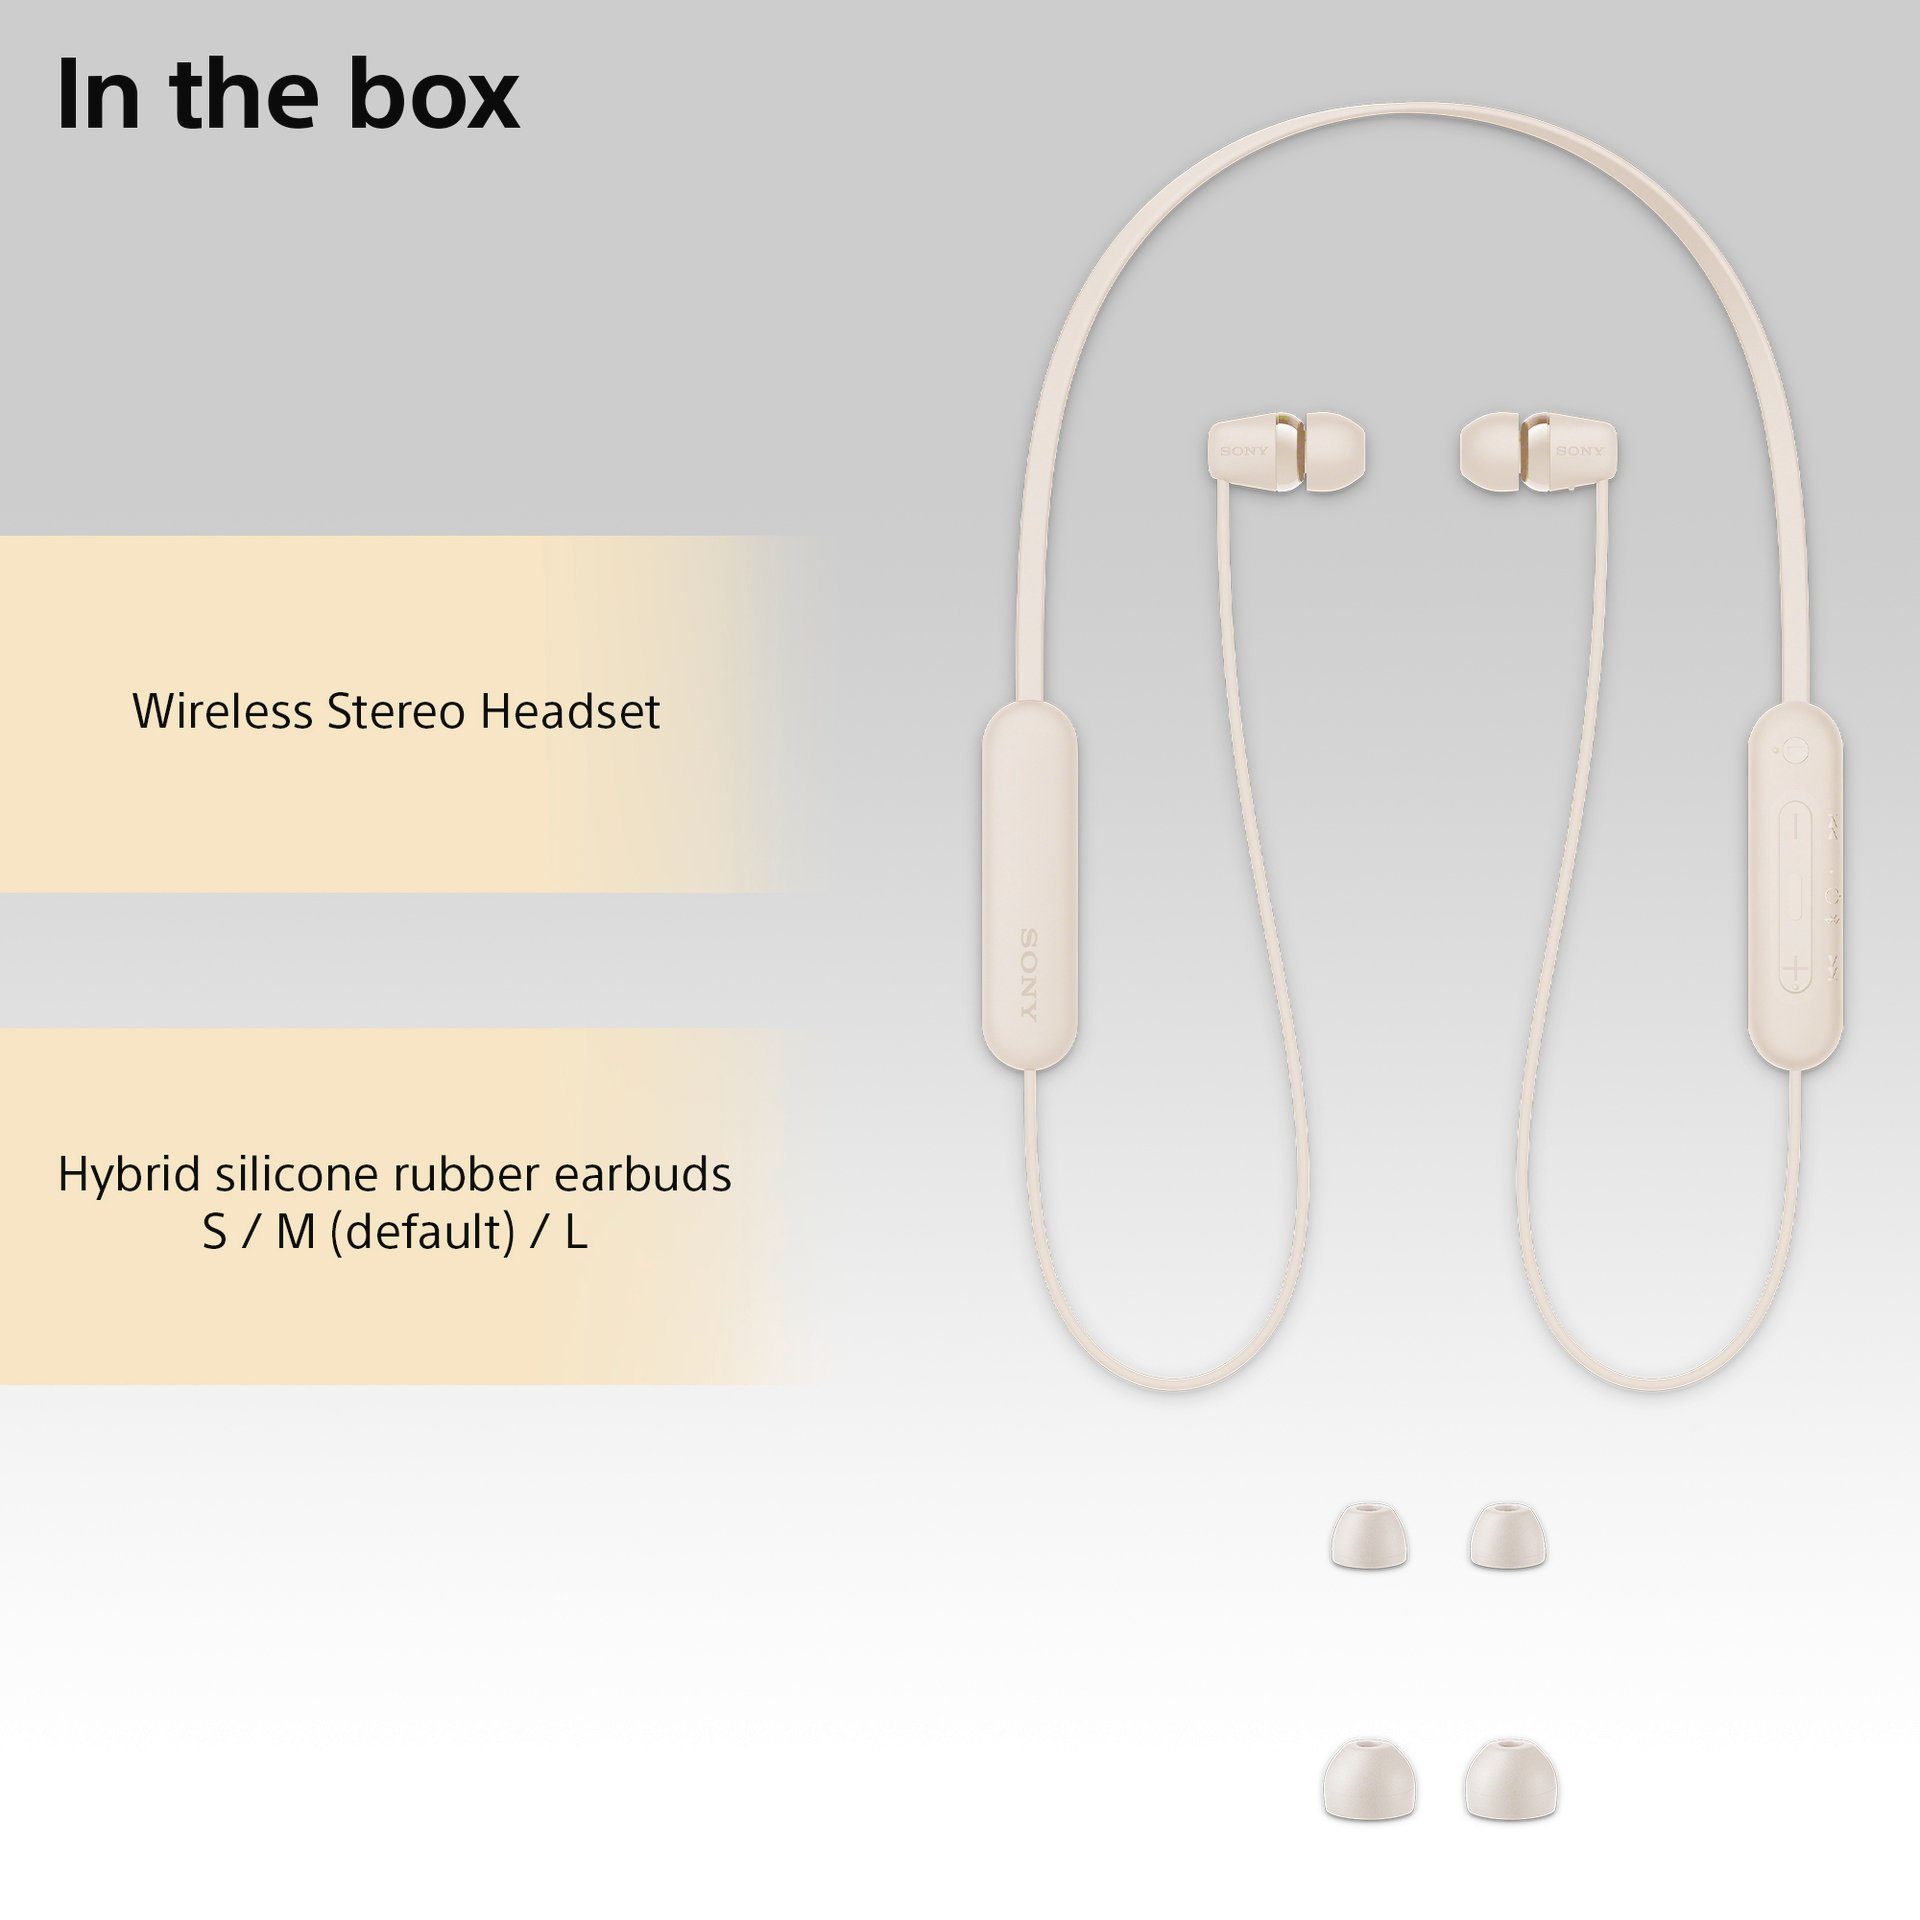 In-Ear-Kopfhörer (Sprachsteuerung) In-Ear beige Kopfhörer WI-C100 Sony